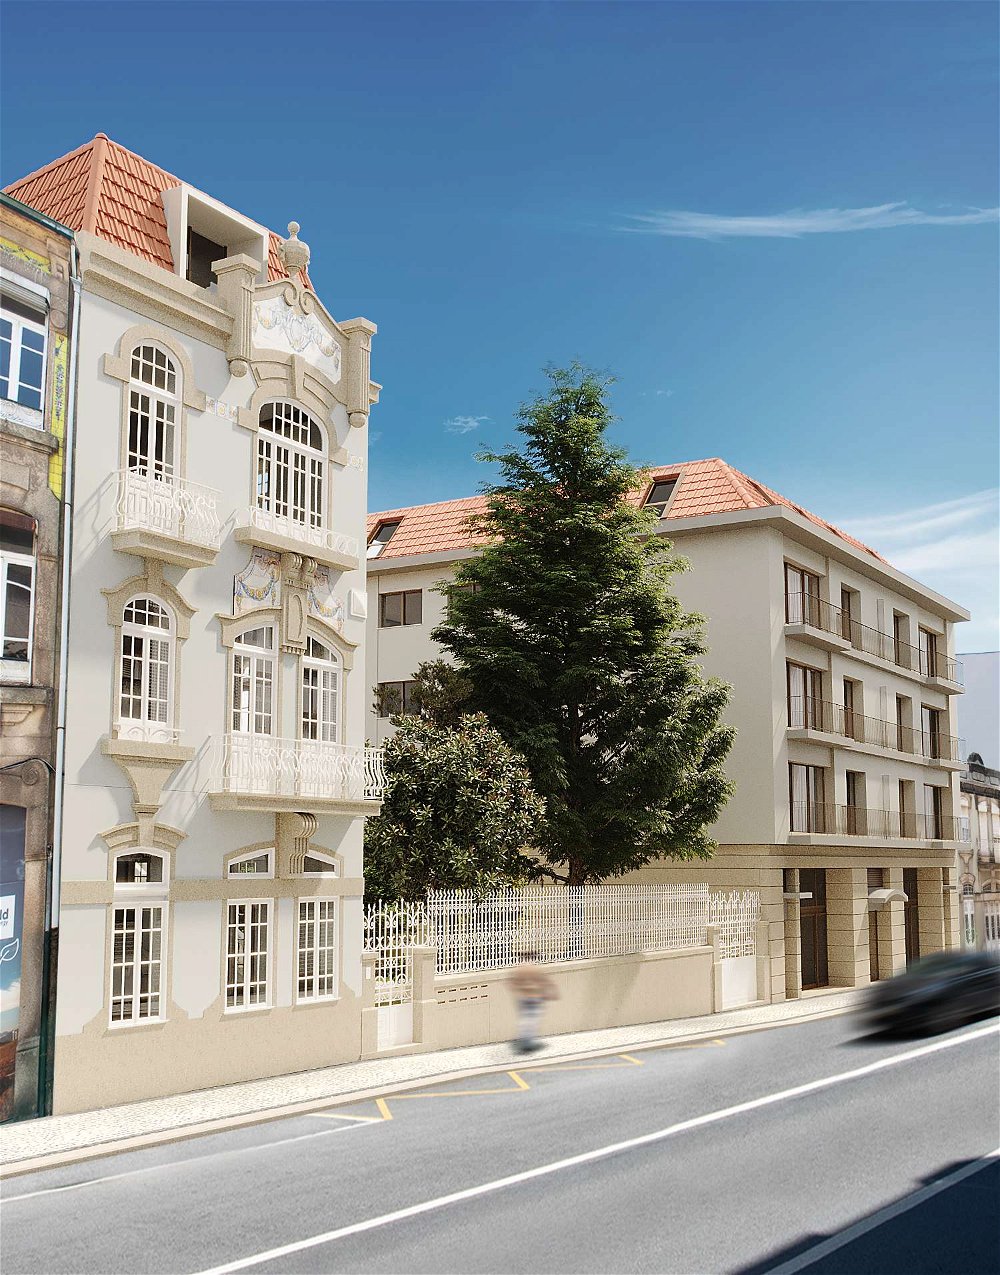 2 bedroom apartment with balcony and parking in Cedofeita, Porto 2514364281